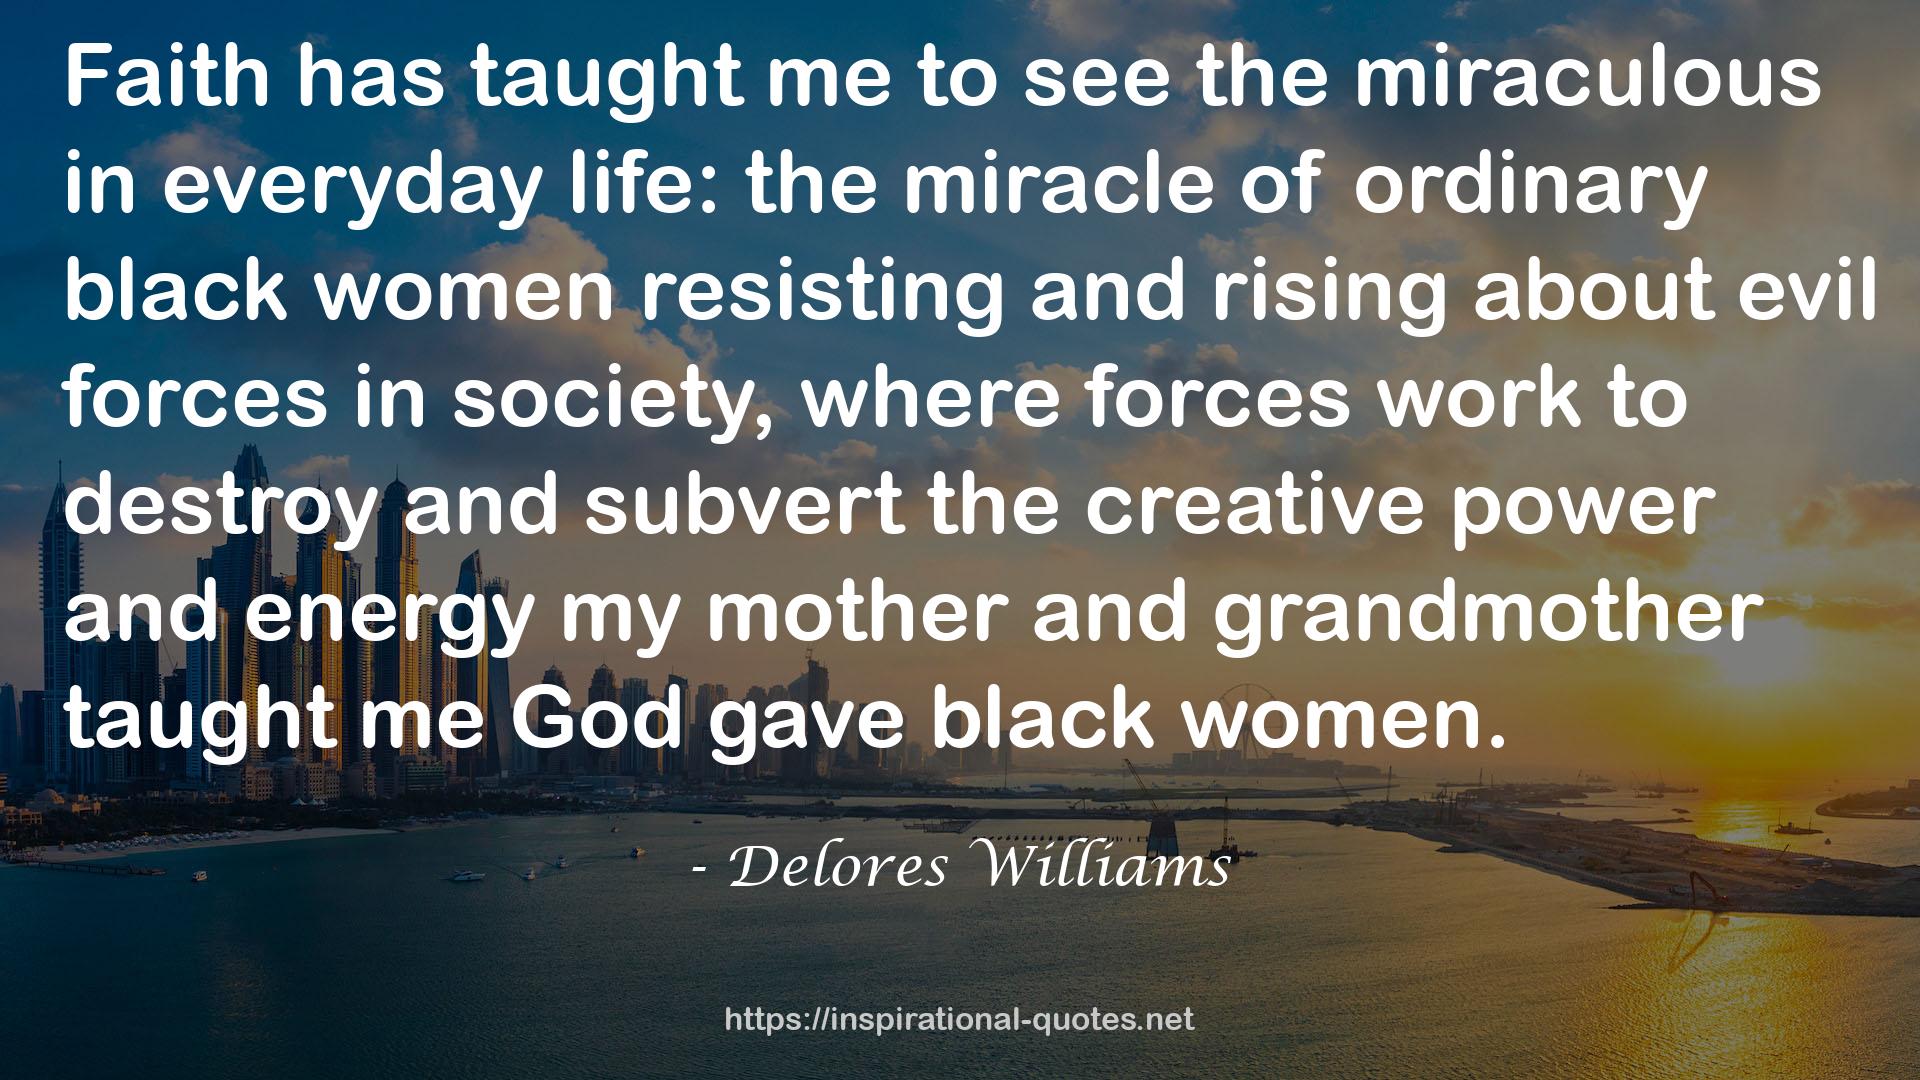 Delores Williams QUOTES